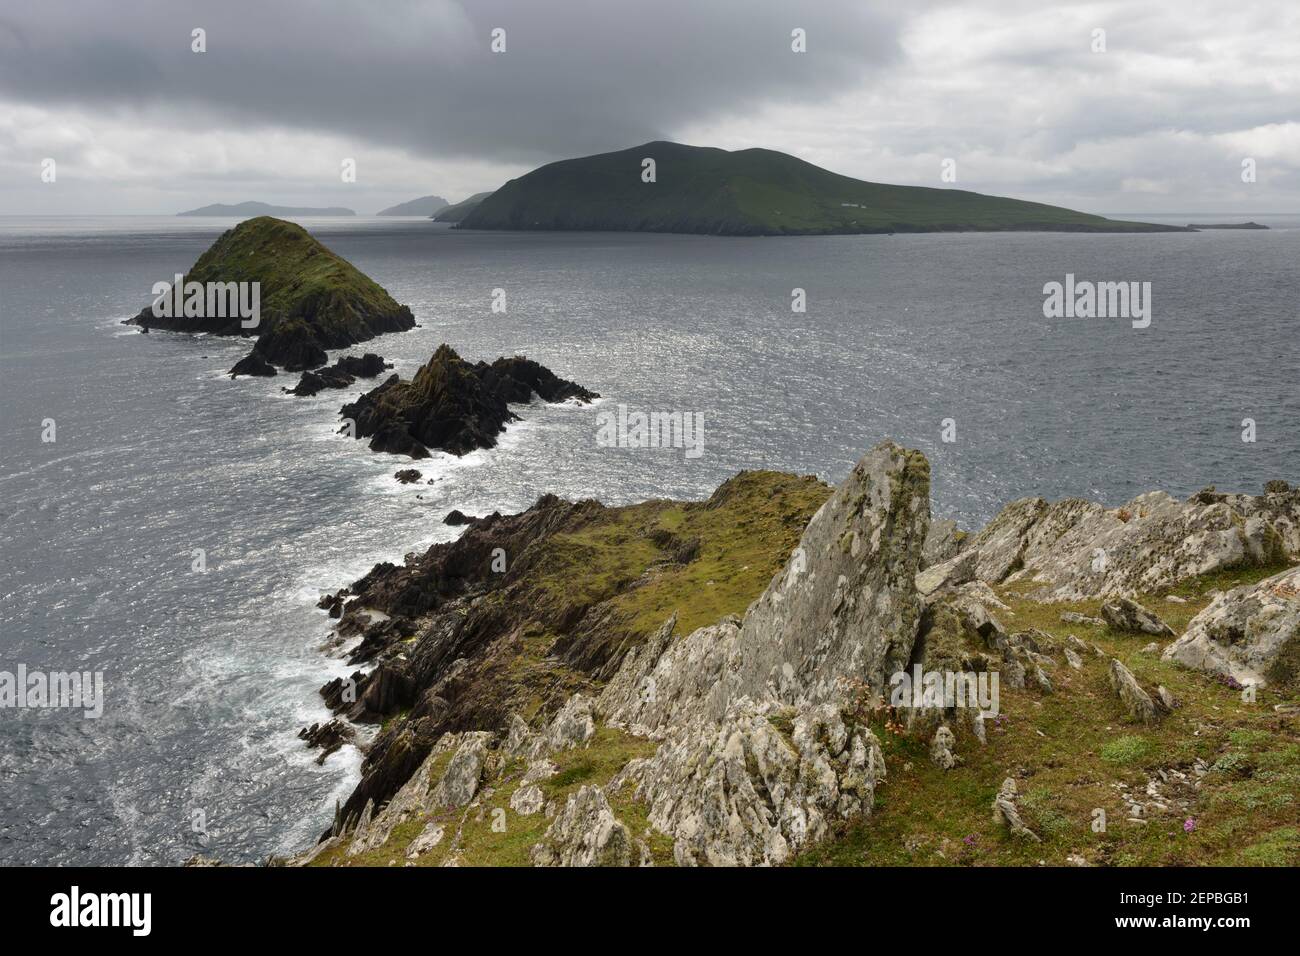 View from Slea Head towards the Blasket Islands off the coast of the Dingle Peninsula, Ireland. Stock Photo